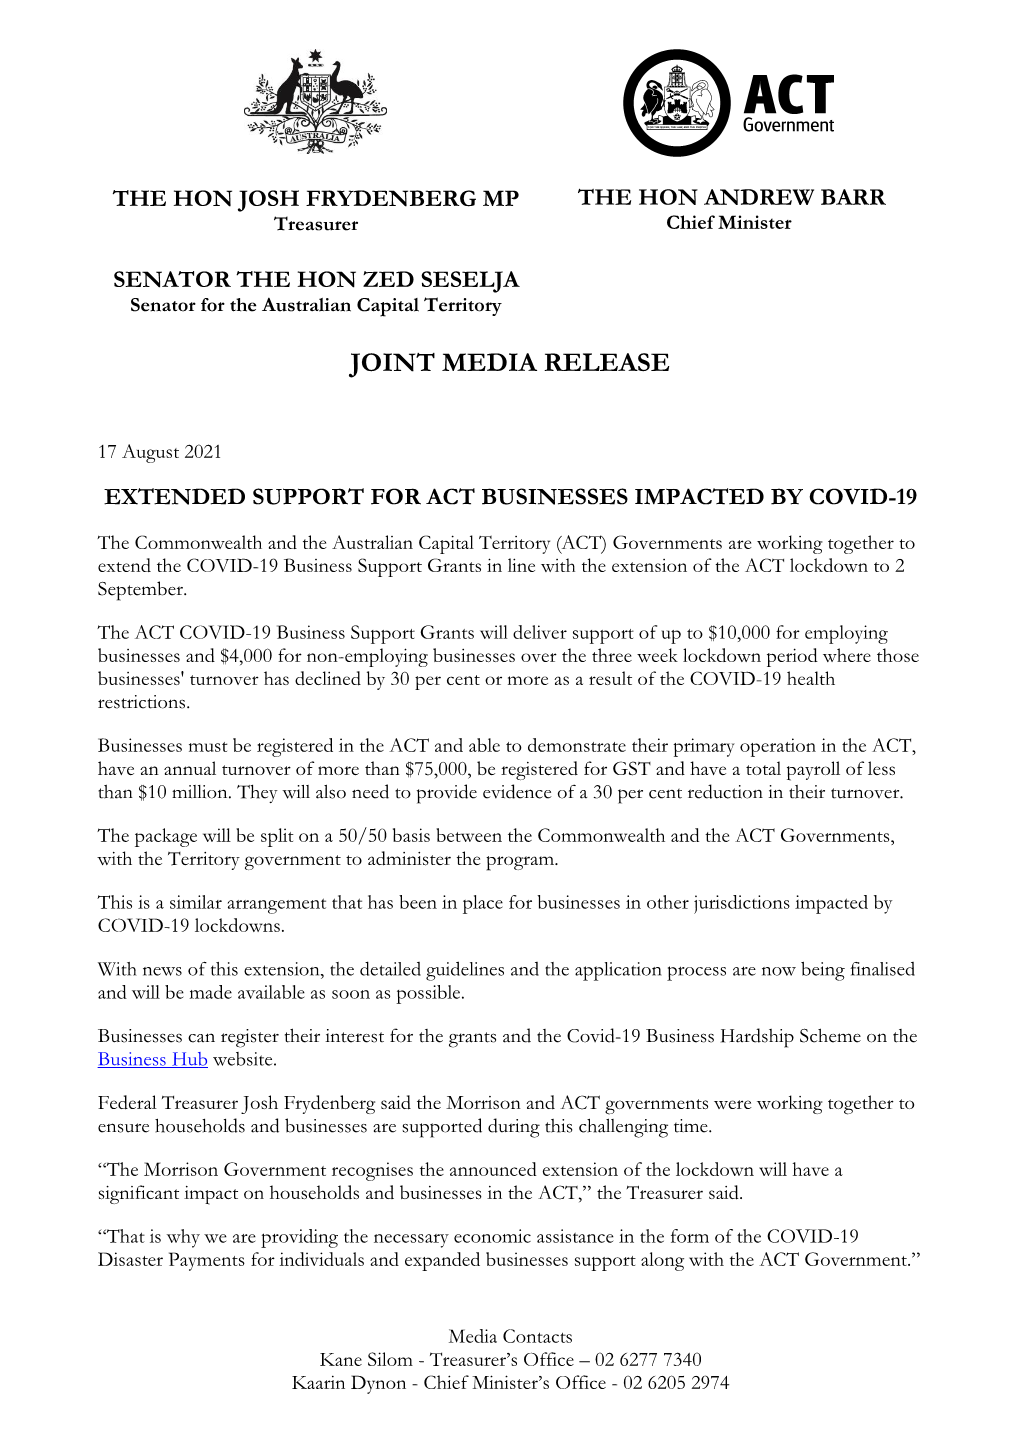 Treasurer Press Release